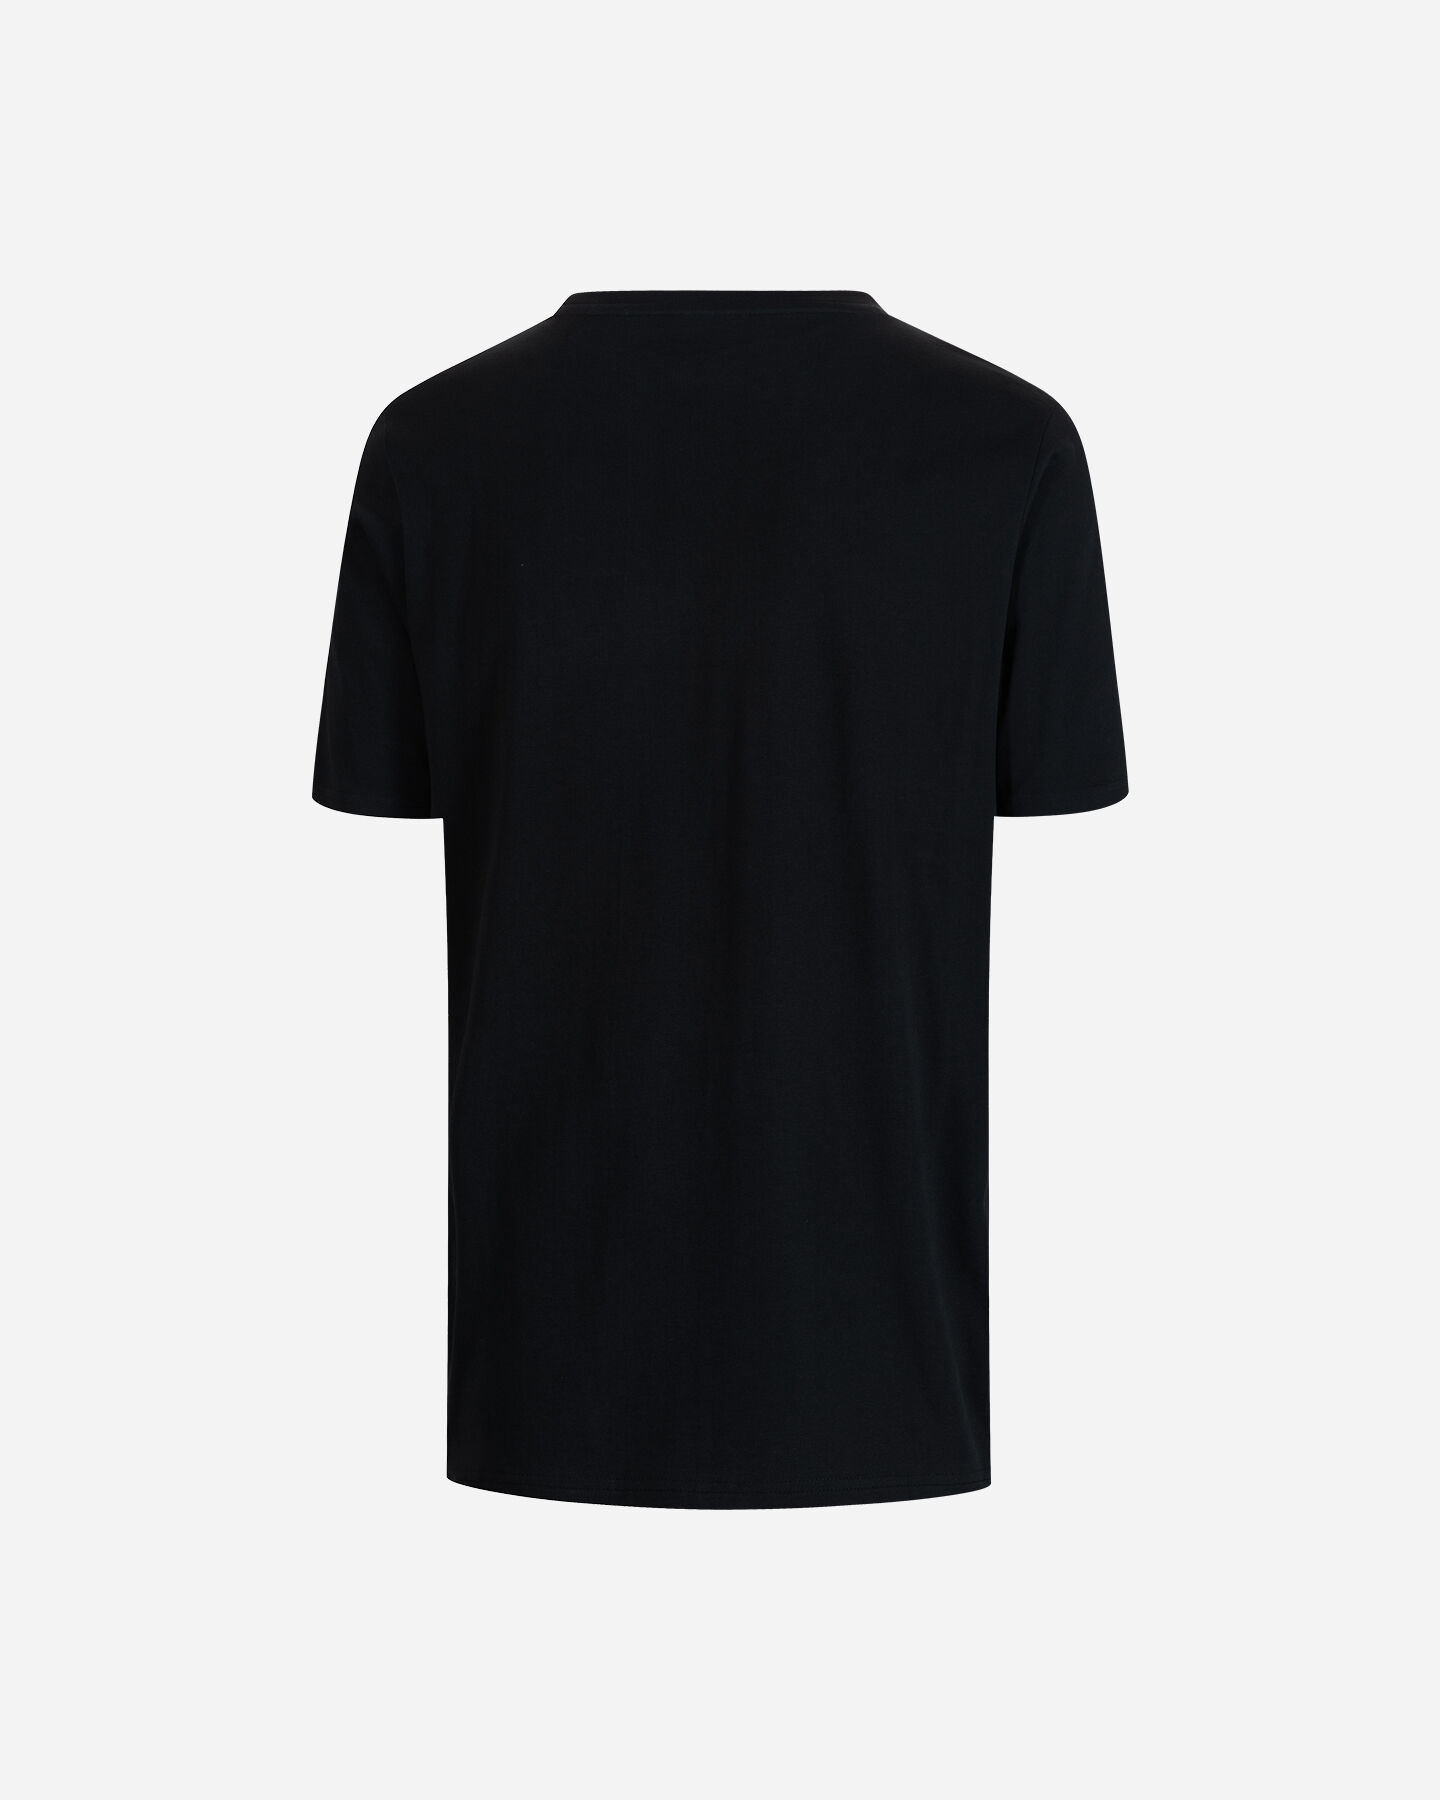  T-Shirt BEAR STREETWEAR URBAN STYLE M S4126731|050|XXL scatto 1